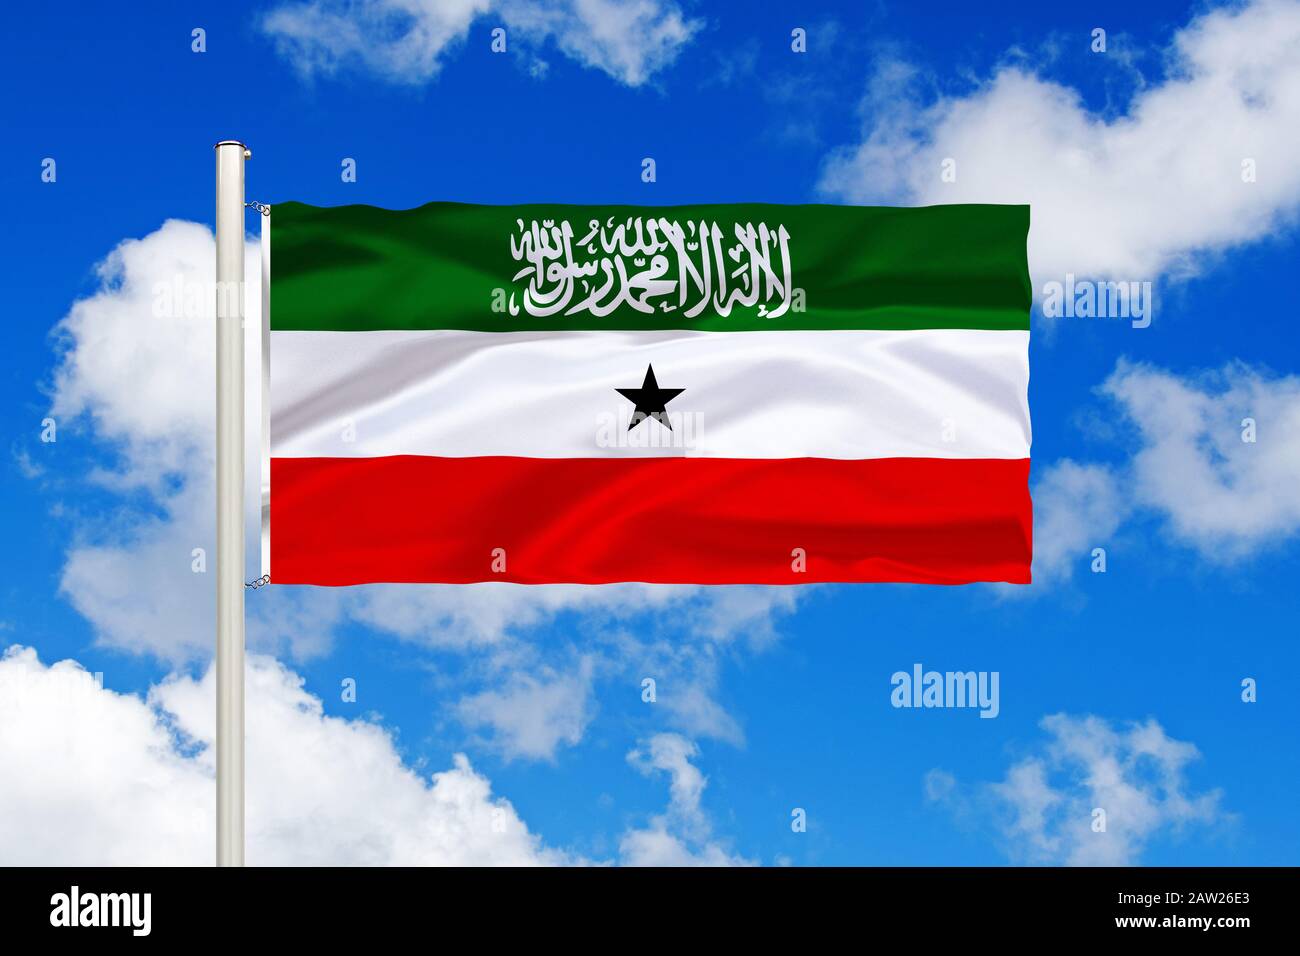 flag of Somaliland in front of blue cloudy sky, Somalia, Somaliland Stock Photo